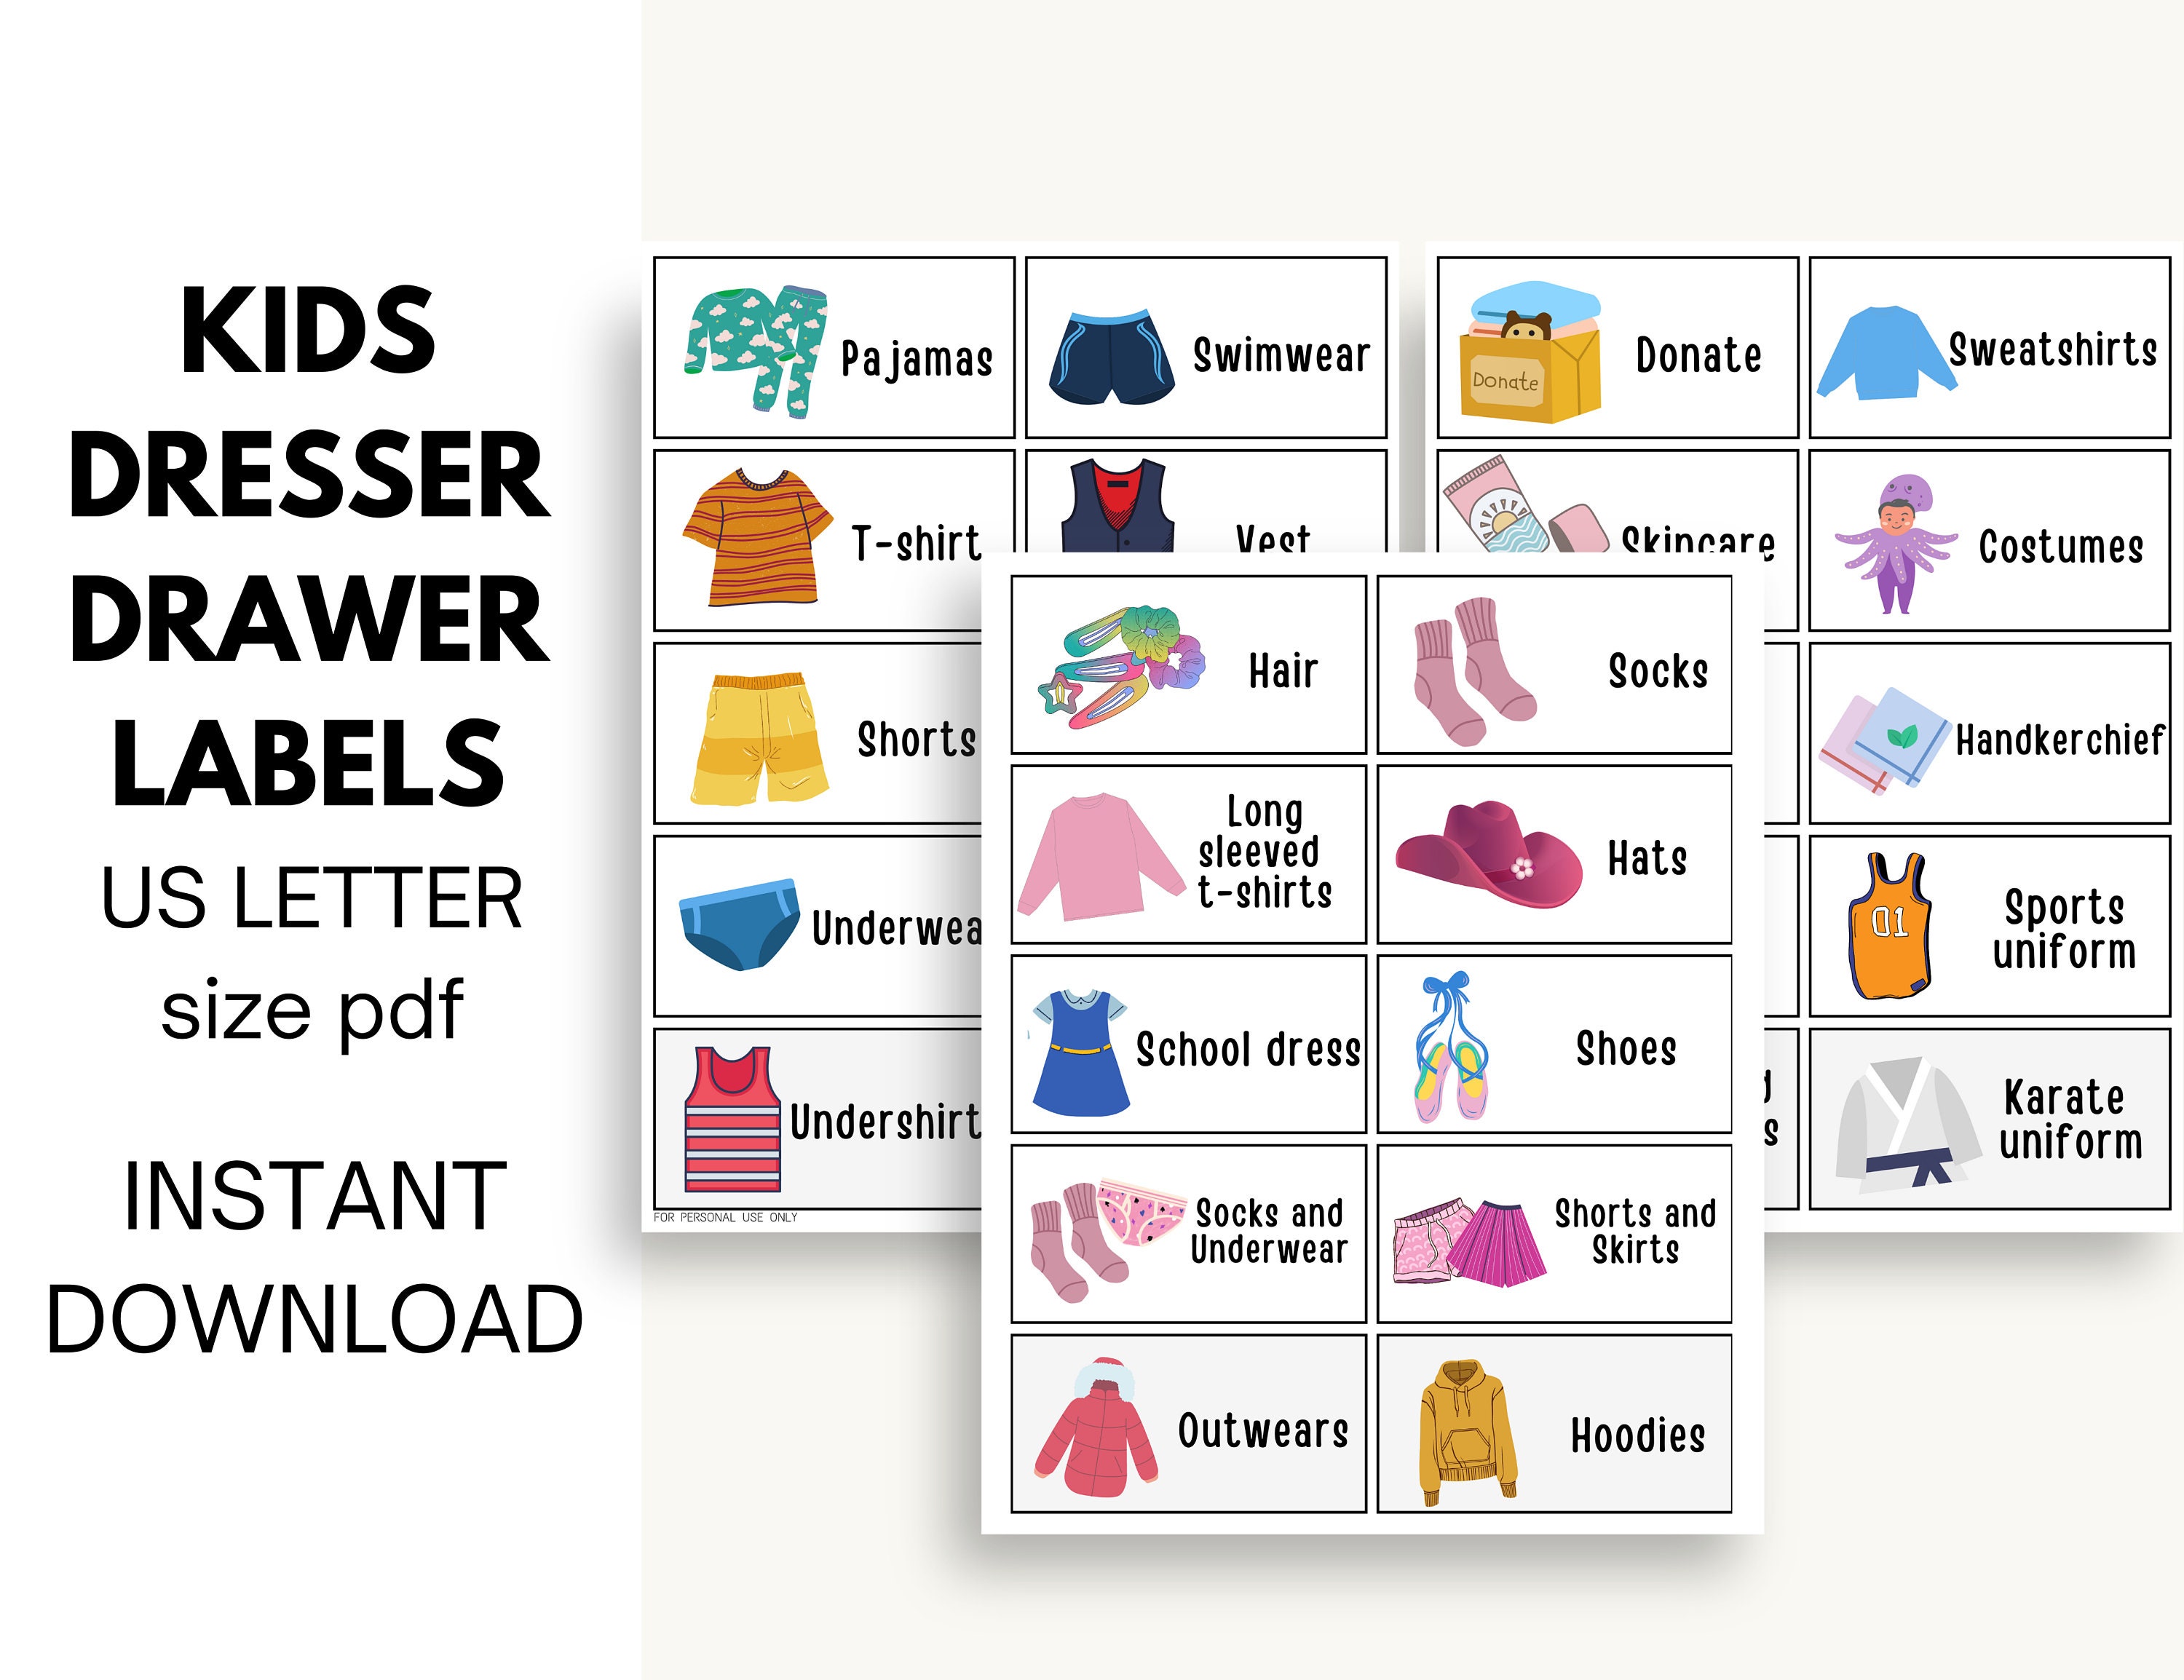 Kids Closet Organizational Labels Printable - Boys - Juju Sprinkles